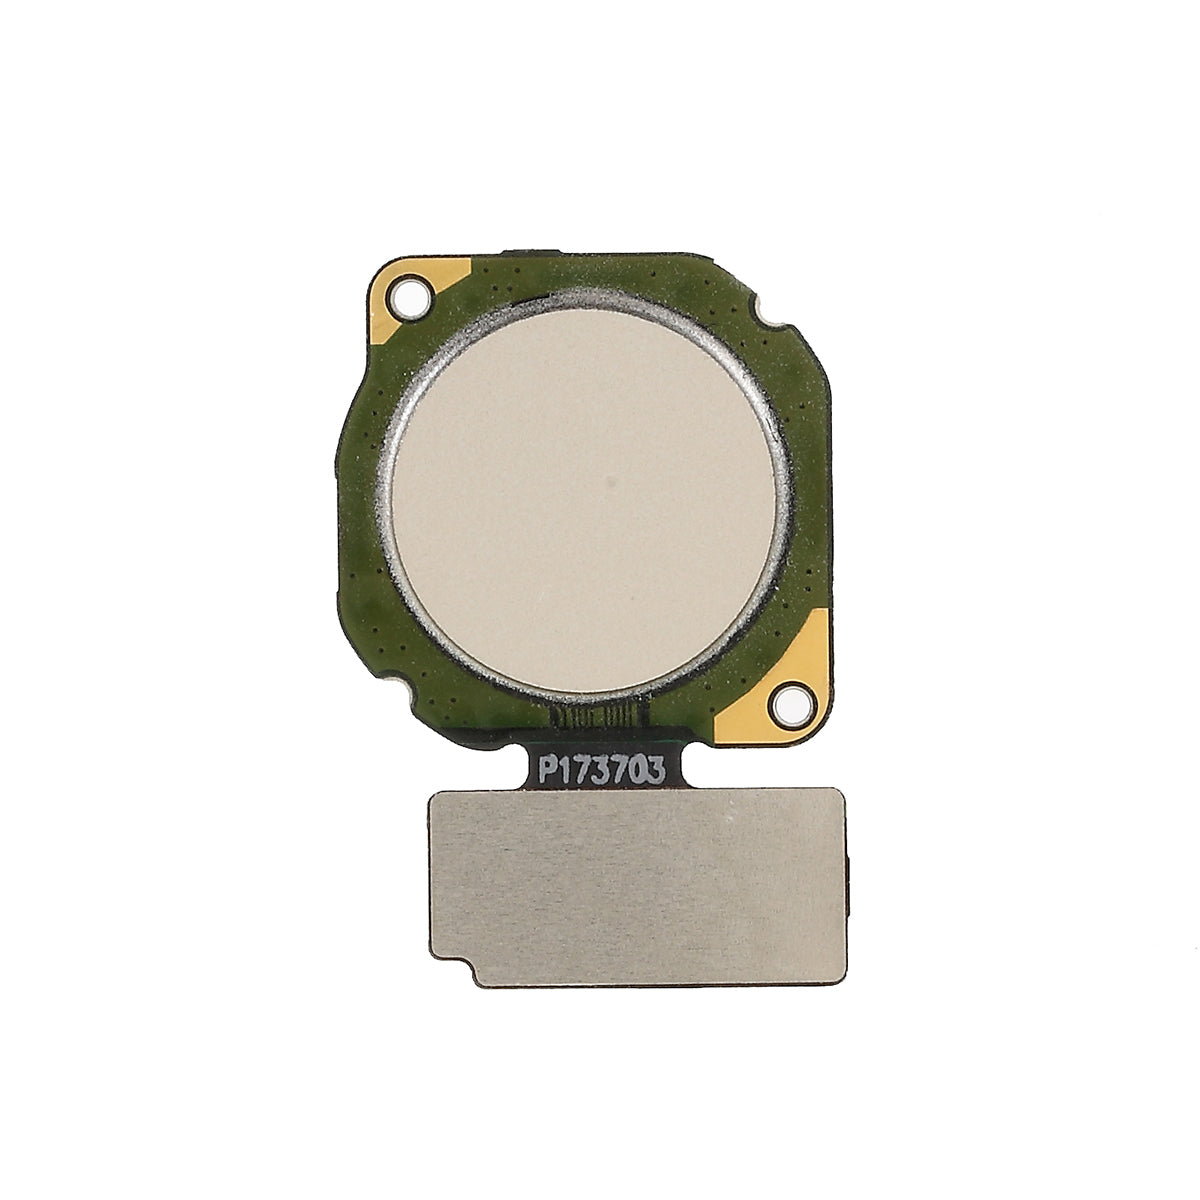 OEM Home Key Fingerprint Button Flex Cable Repair Part for Huawei Mate 20 Lite - Gold